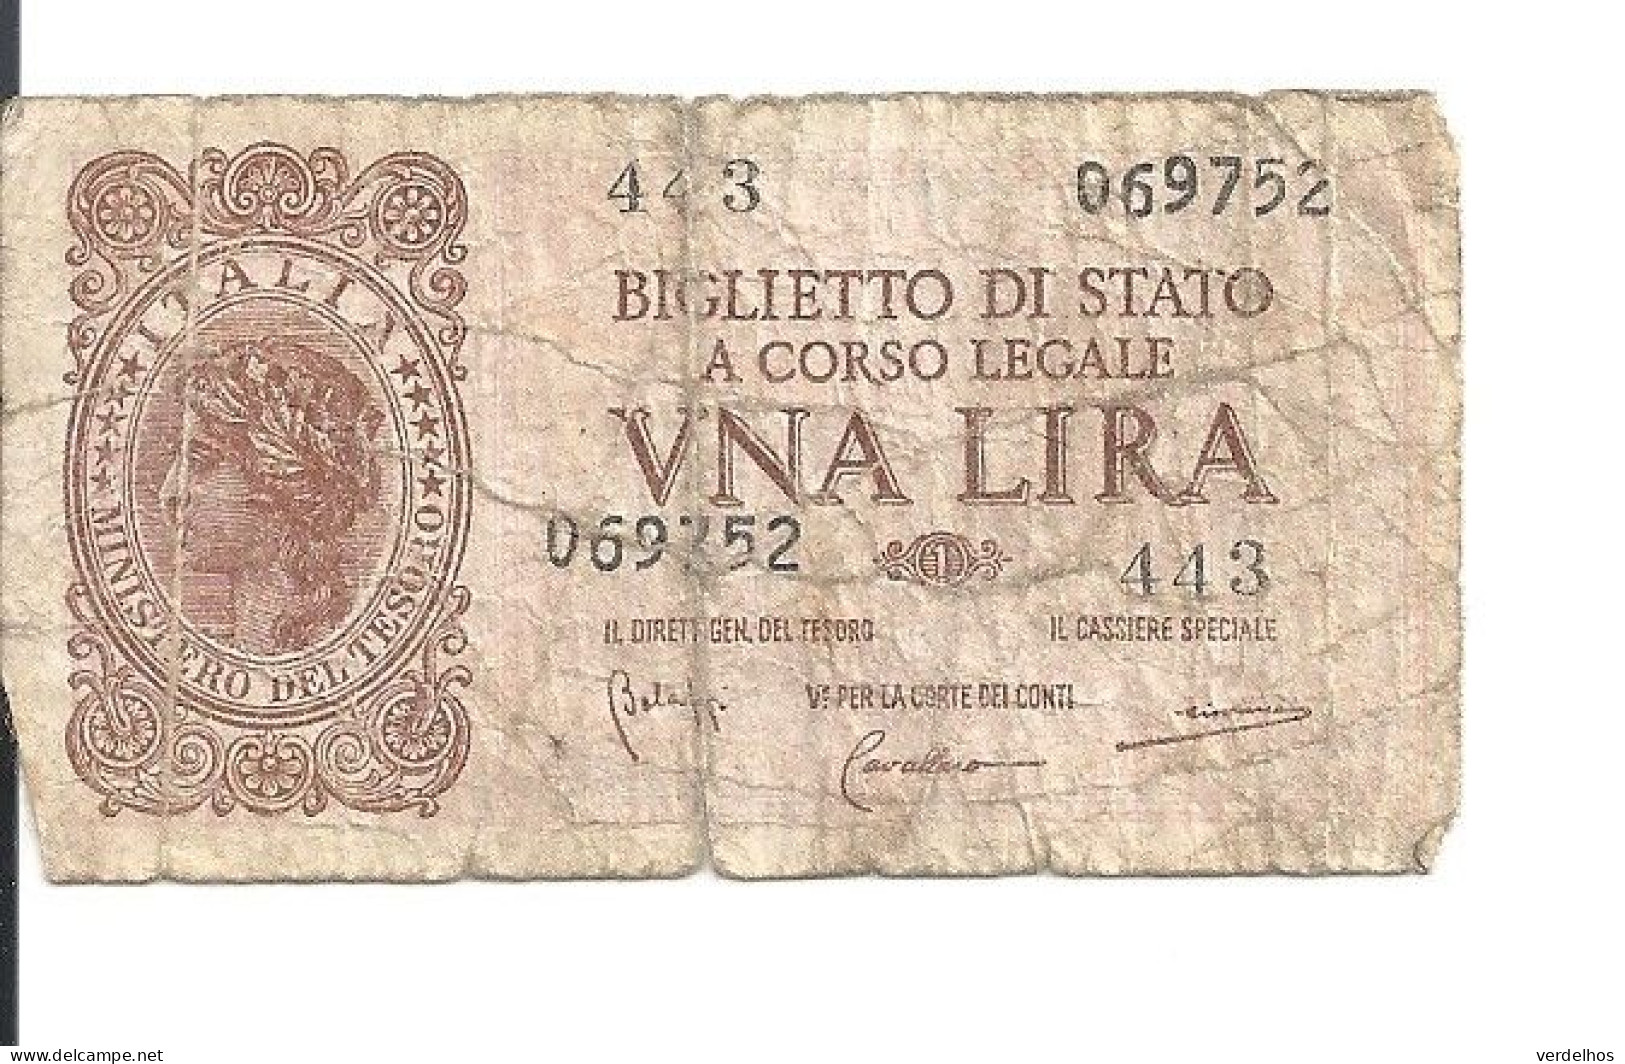 ITALIE 1 LIRE 1944 VG+ P 29 B - Regno D'Italia – 1 Lira